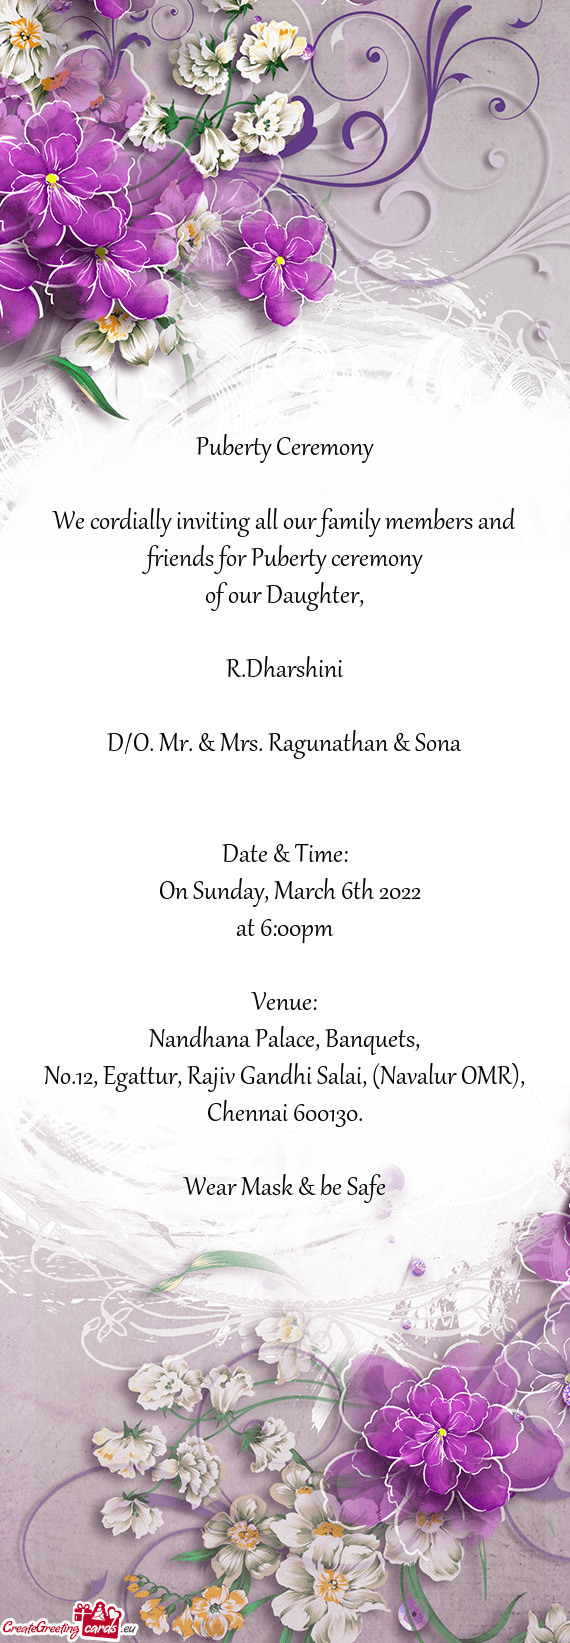 D/O. Mr. & Mrs. Ragunathan & Sona